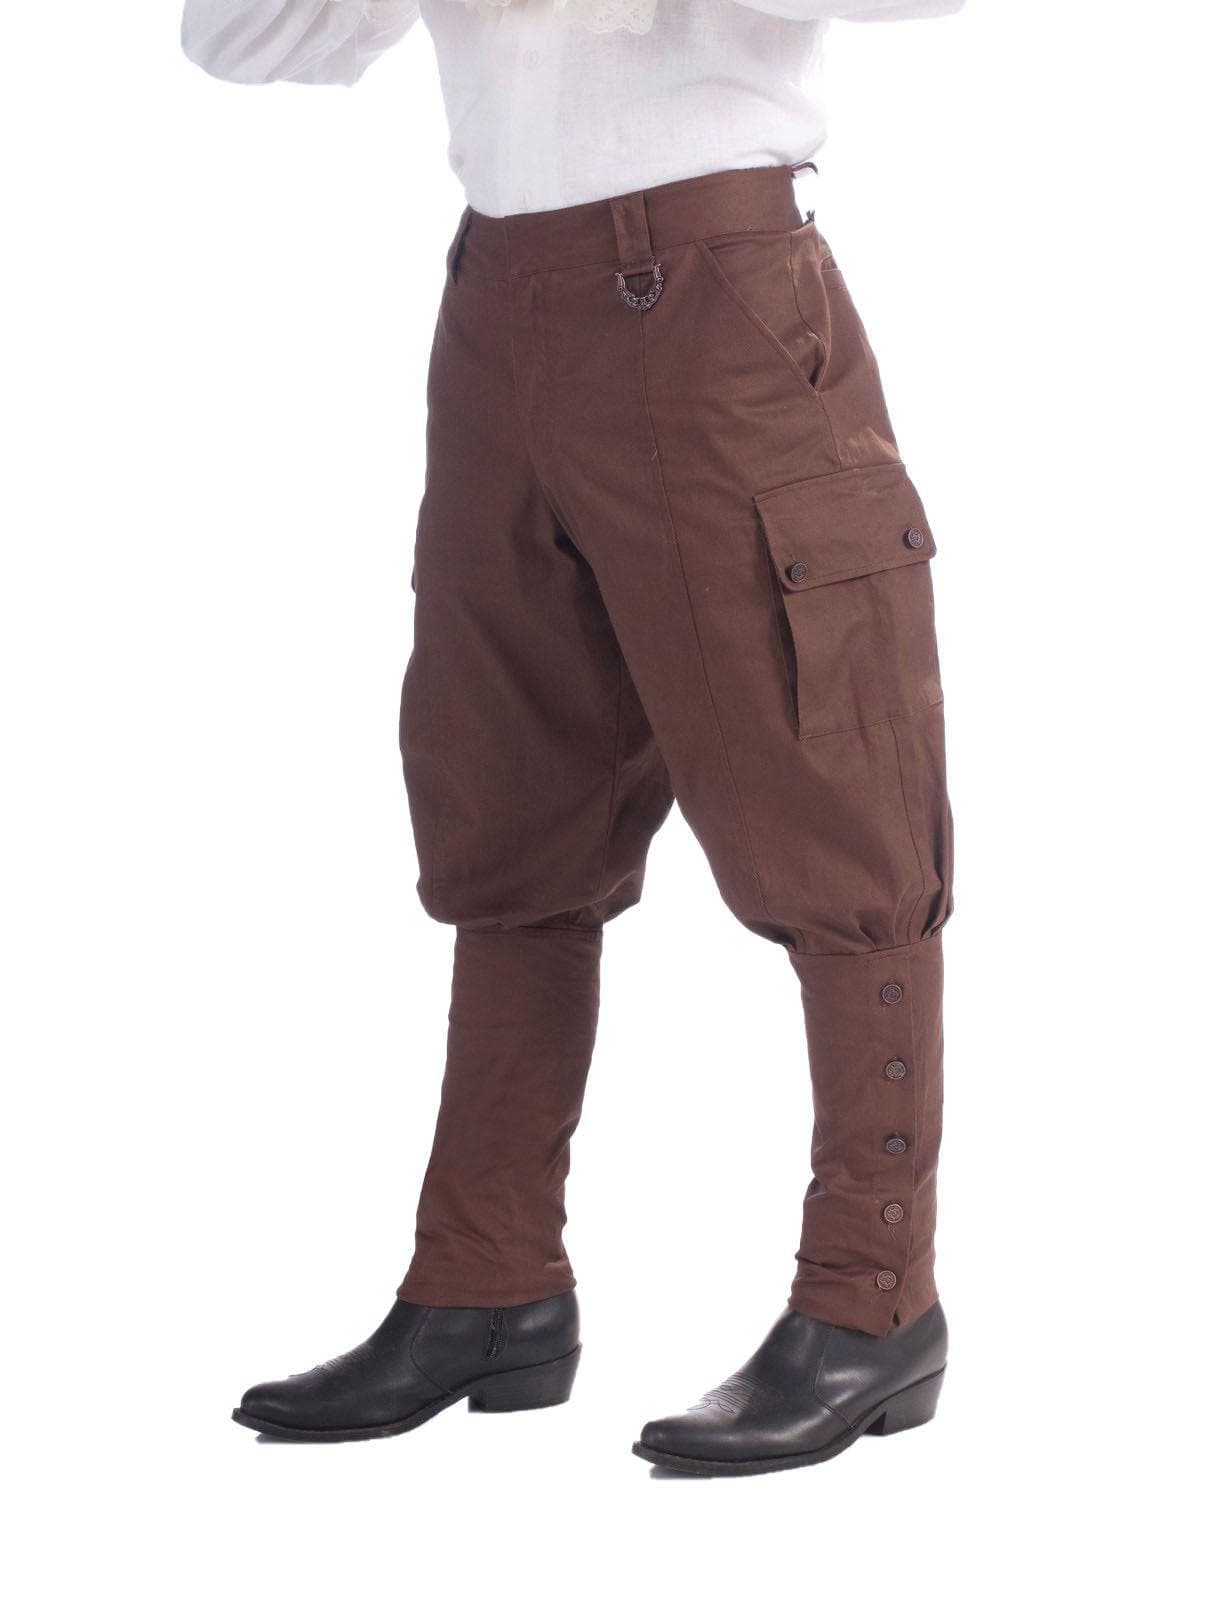 Men's Brown Steampunk Pants - costumes.com